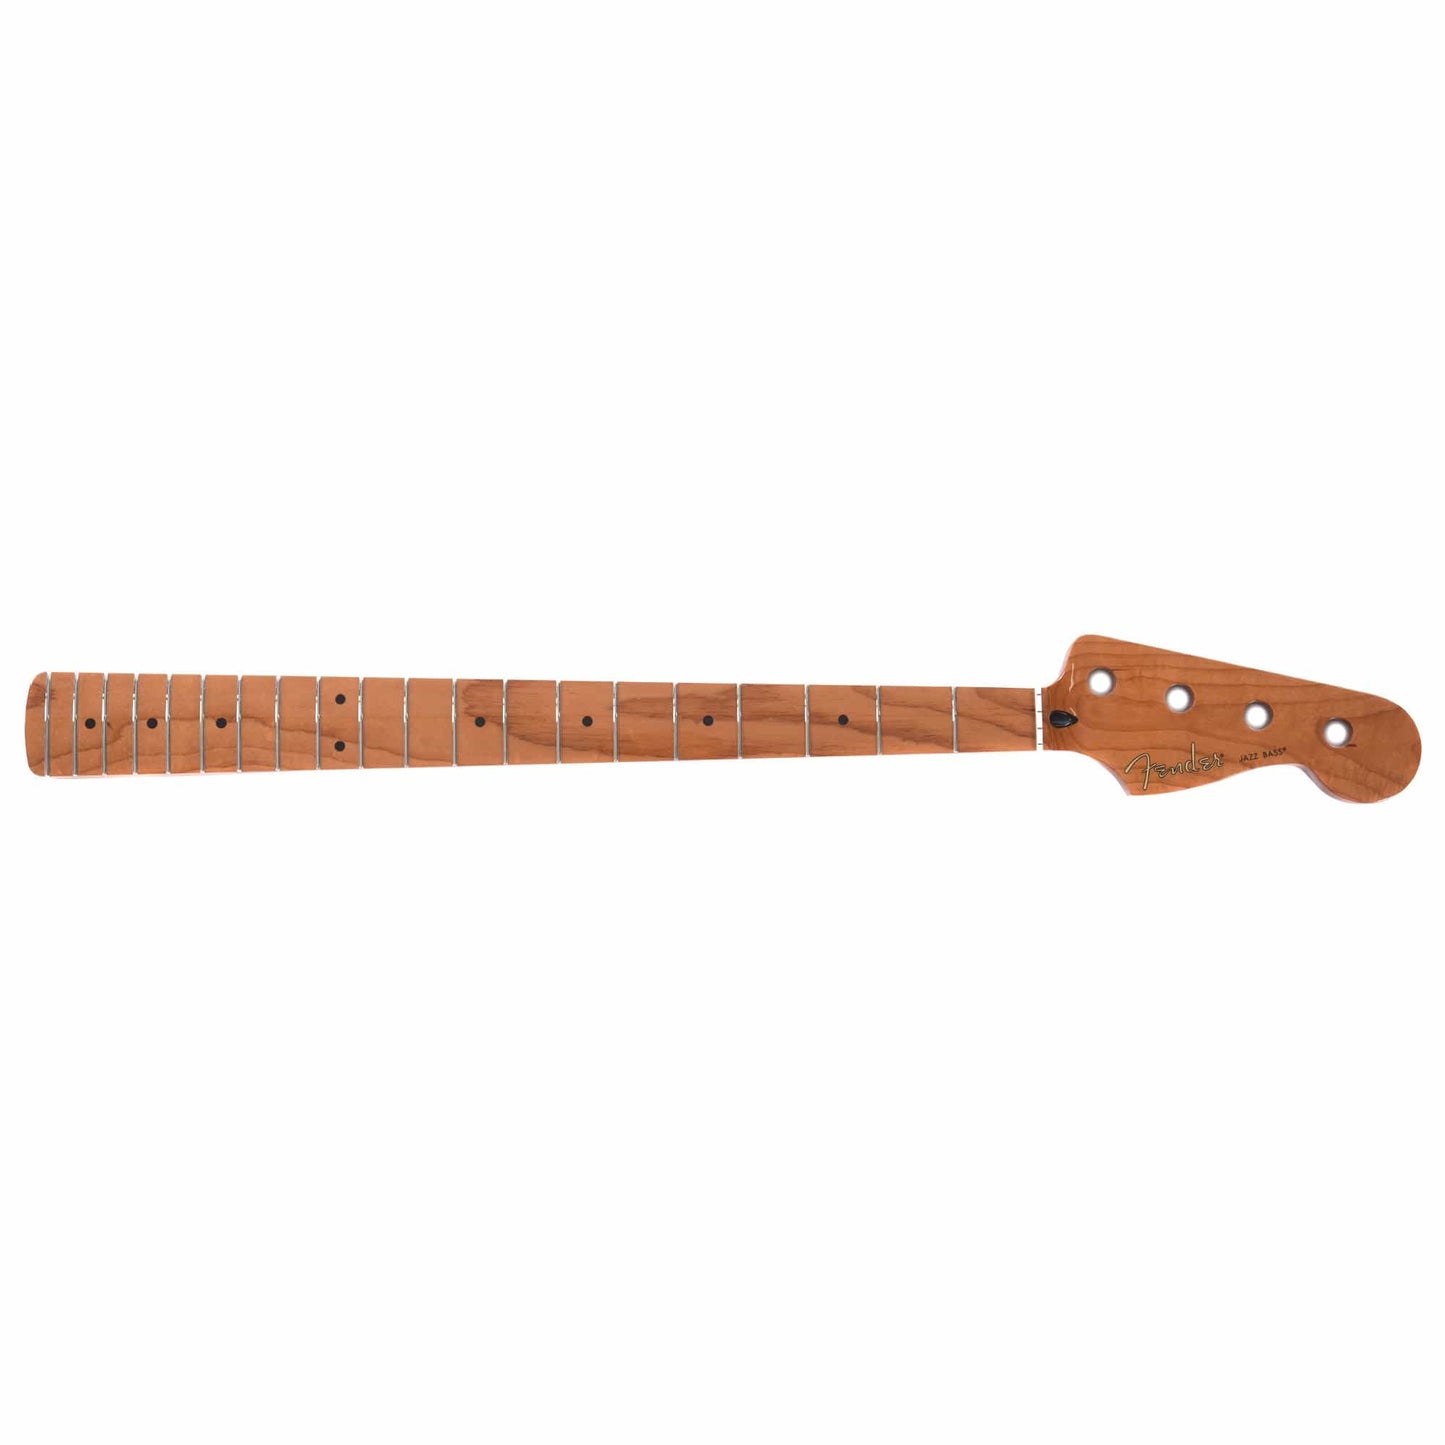 Fender Jazz Bass Neck Roasted Maple "C" MJ w/9.5" Radius & Maple Fingerboard Parts / Bass Guitar Parts